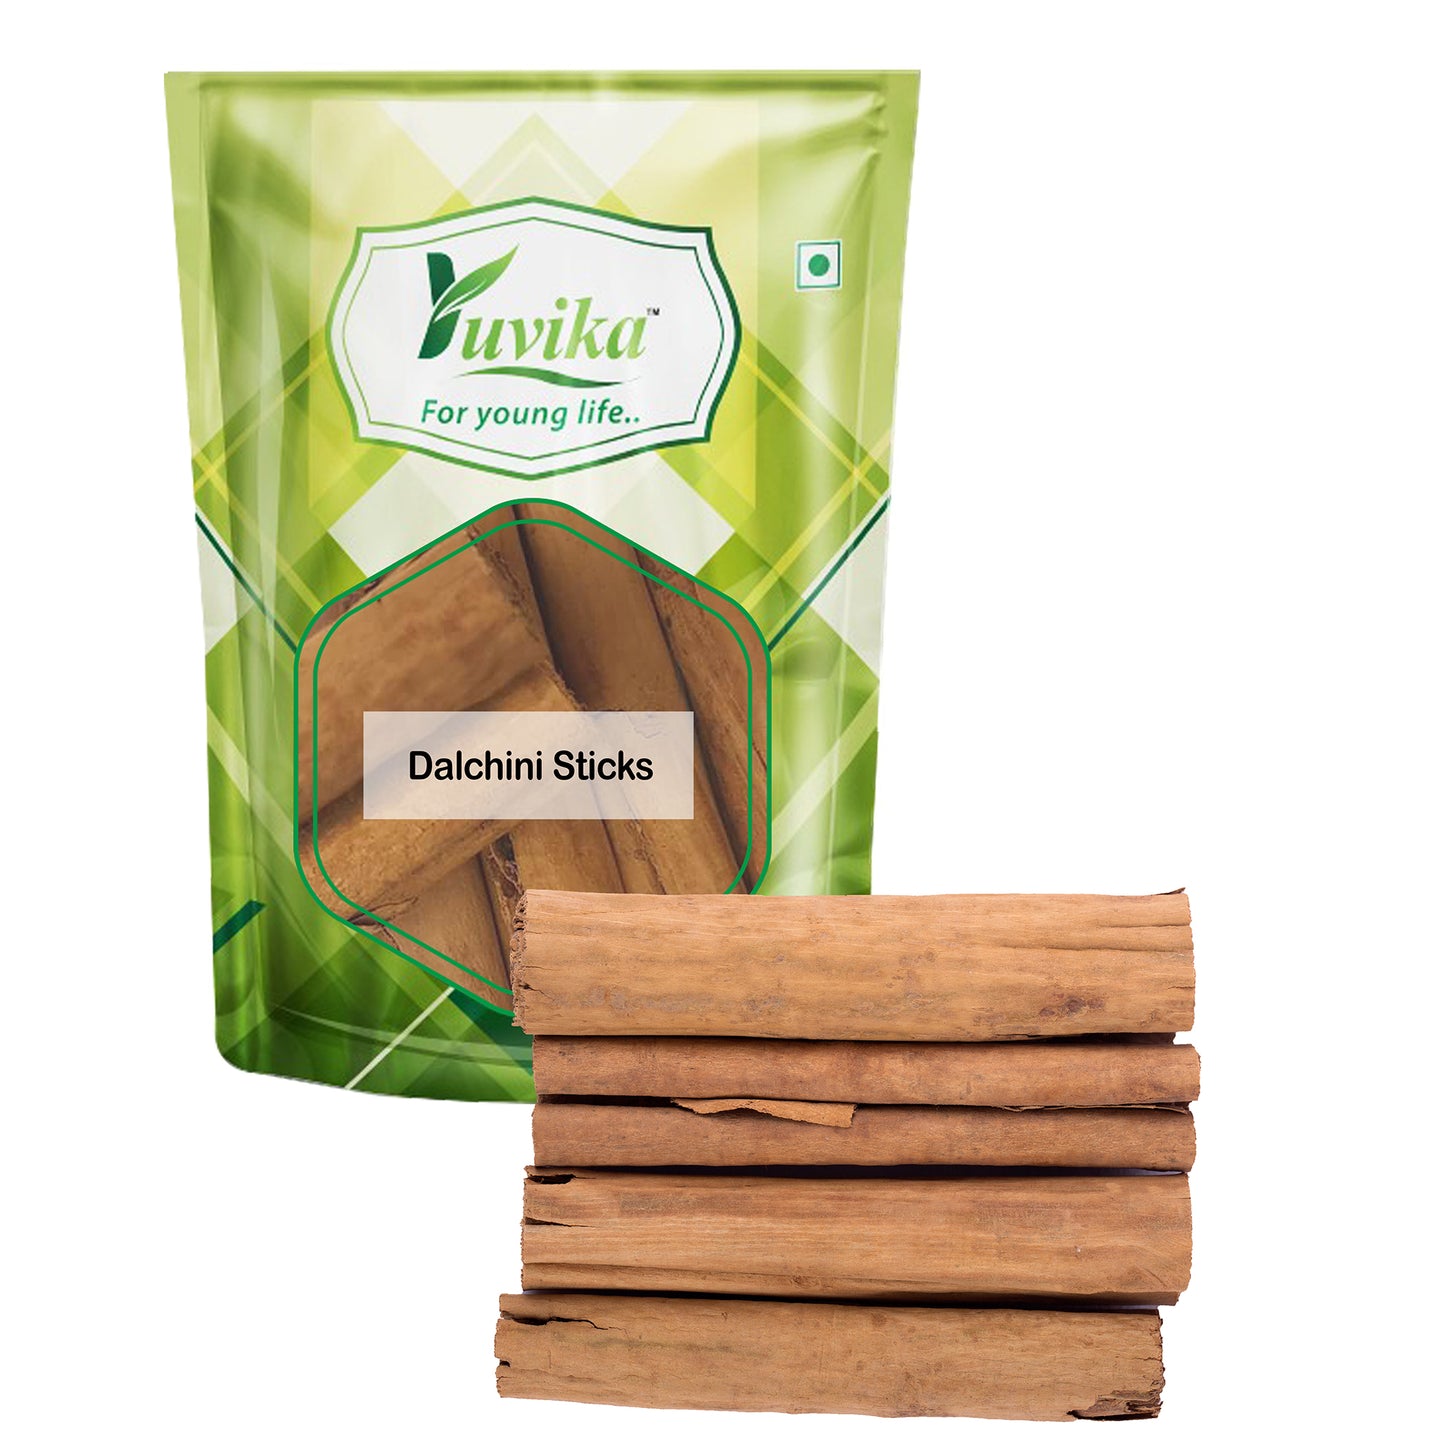 Dalchini Sticks Sri Lankan Cylone Cinnamon Quills